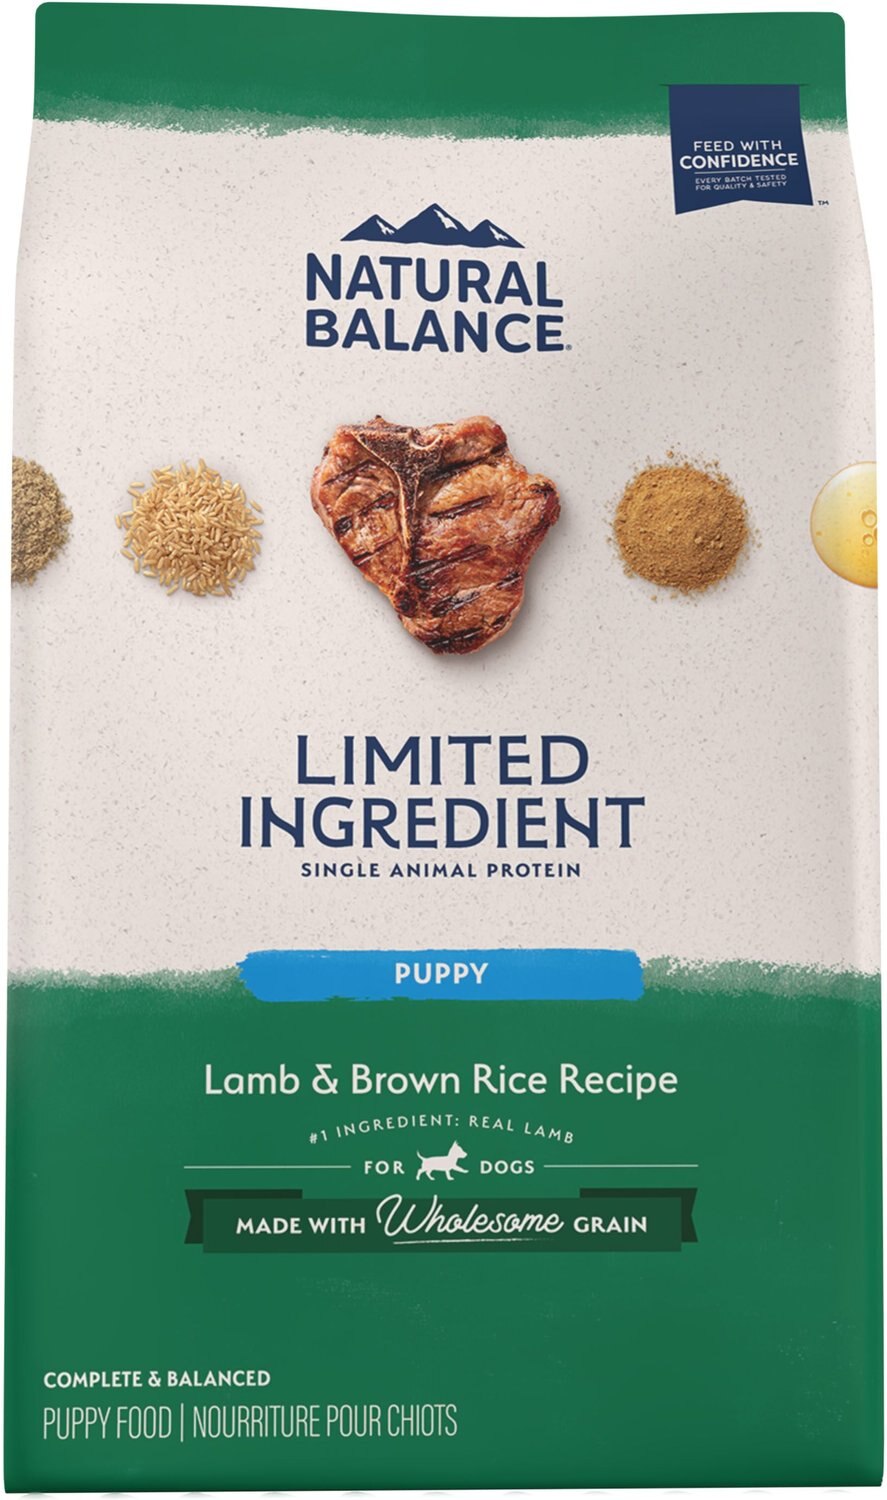 natural balance limited ingredient puppy